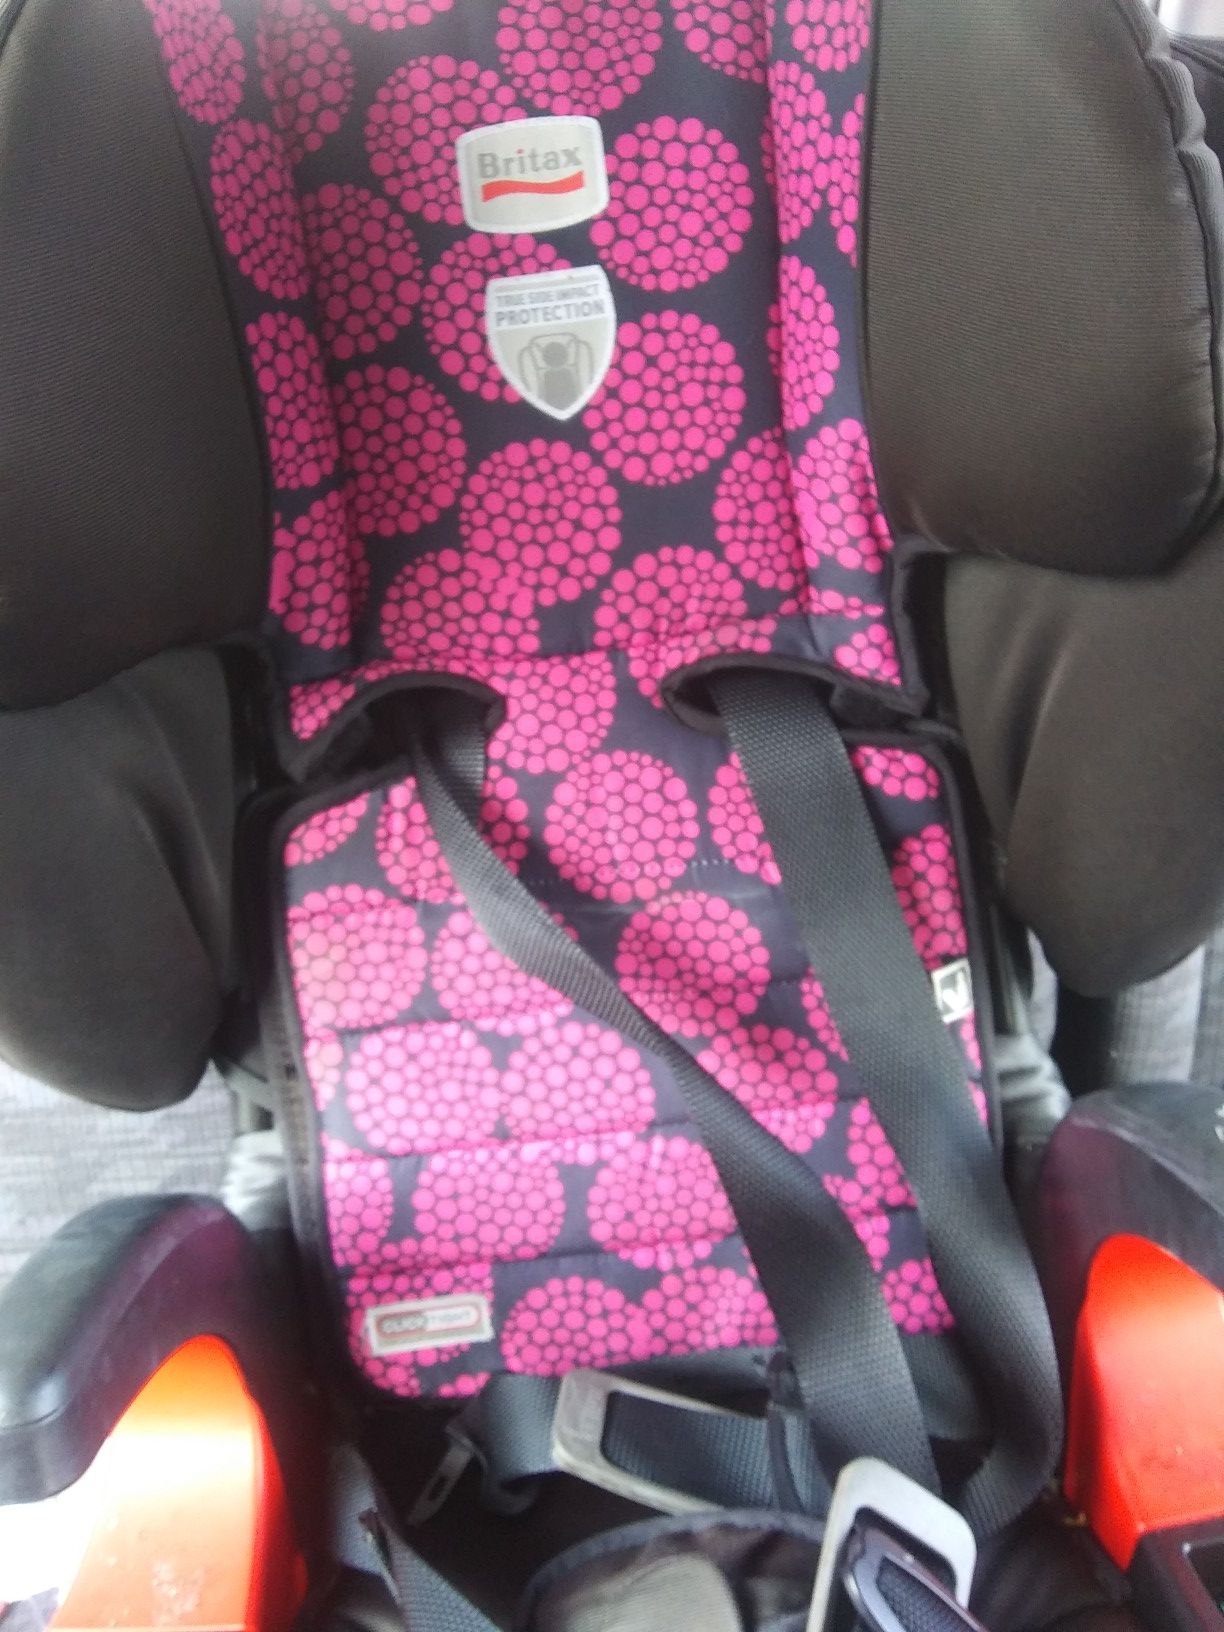 Britax Pinnacle car seat